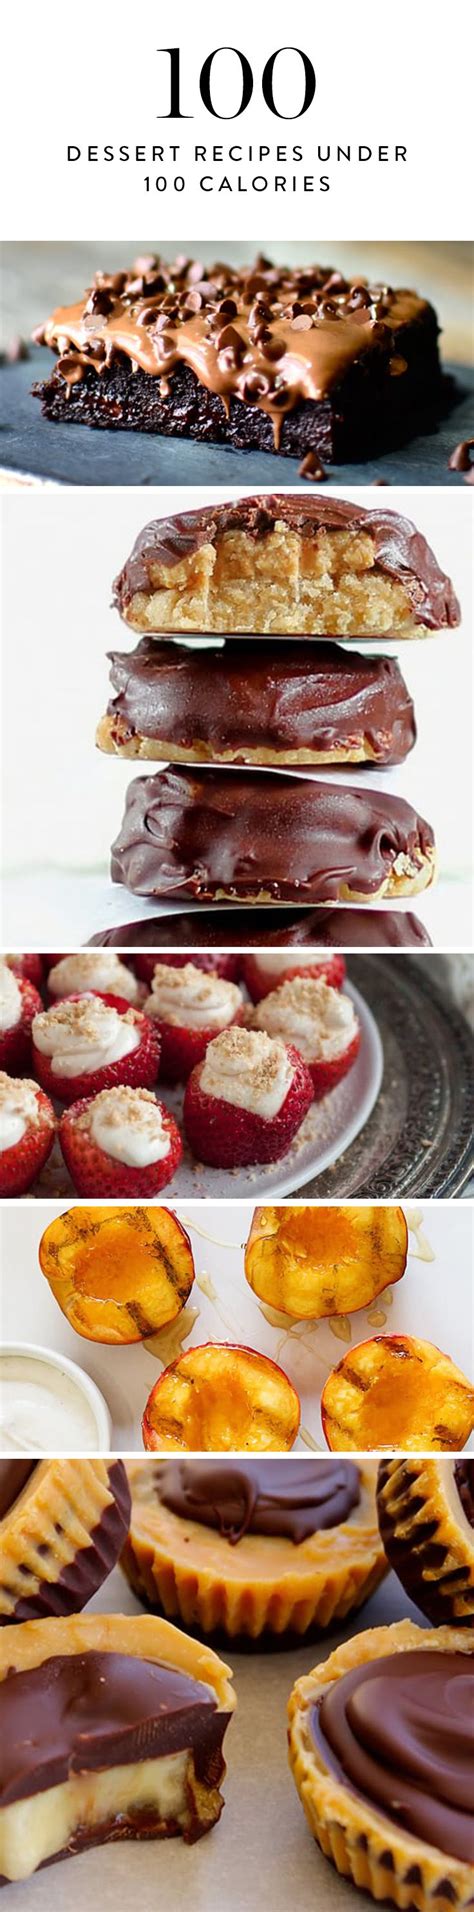 Member recipes for desserts under 50 calories. 100 Dessert Recipes Under 100 Calories | Sweet, Diet and ...